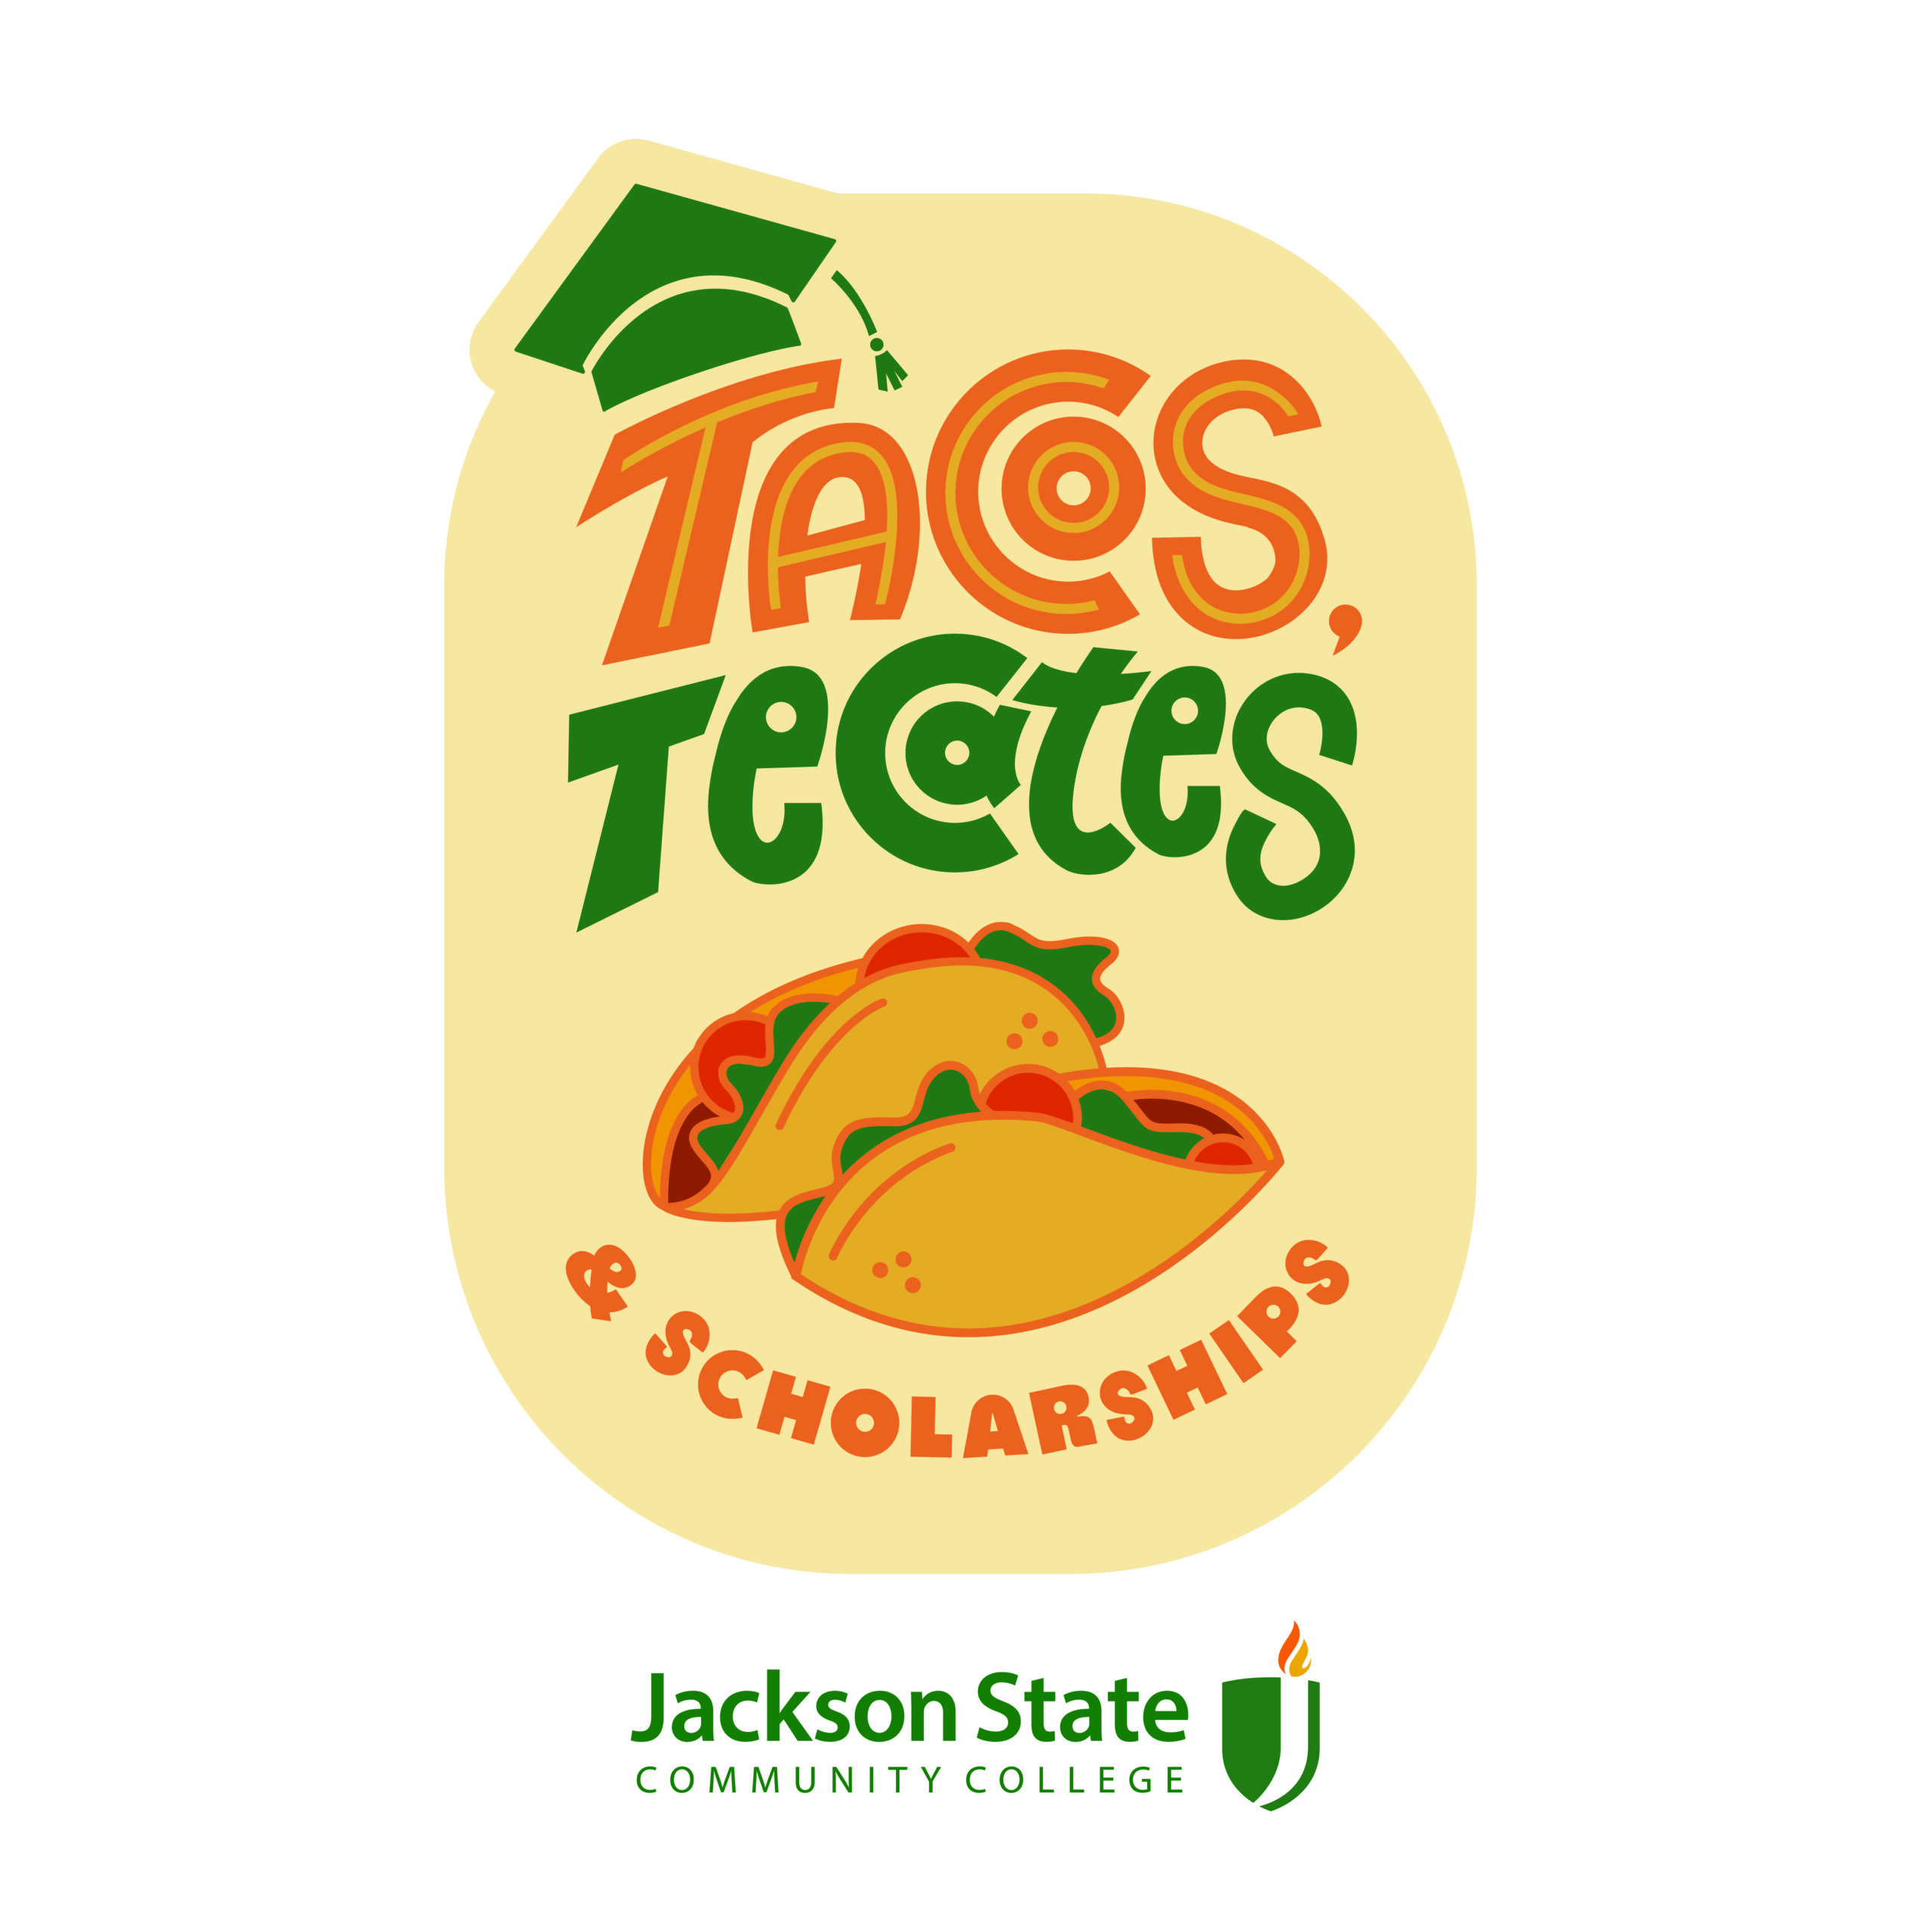 Tacos Tecates Scholarships Fundraiser